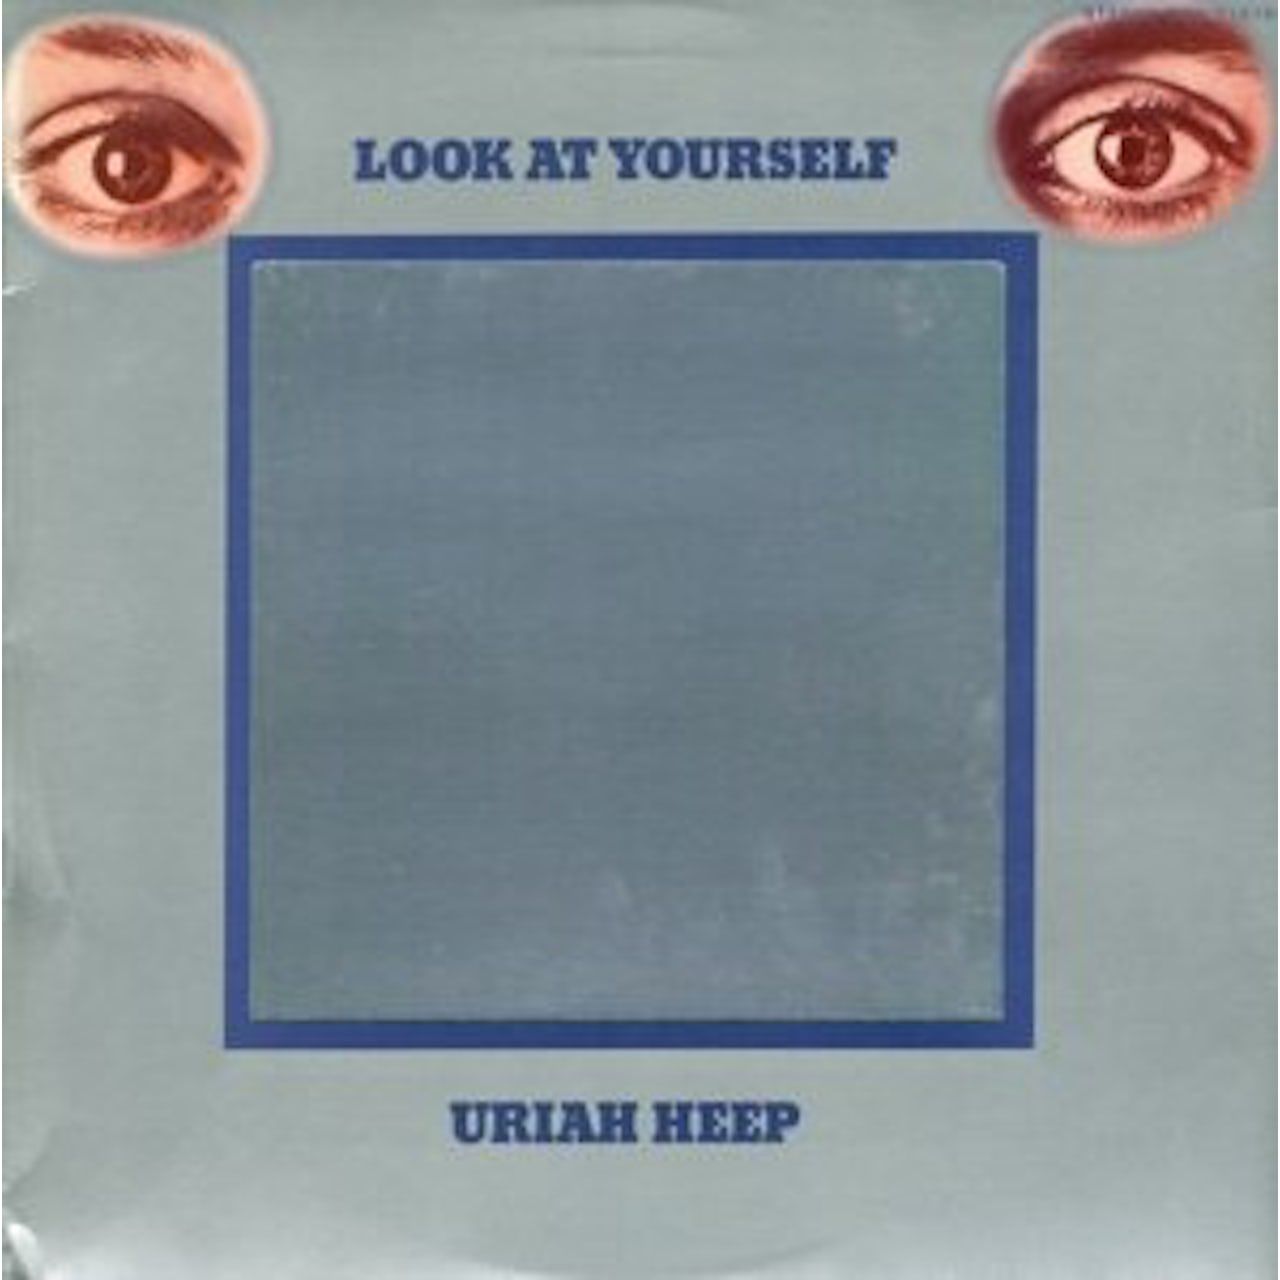 5414939928376, Виниловая пластинка Uriah Heep, Look At Yourself виниловая пластинка uriah heep урия хип look at yourself lp